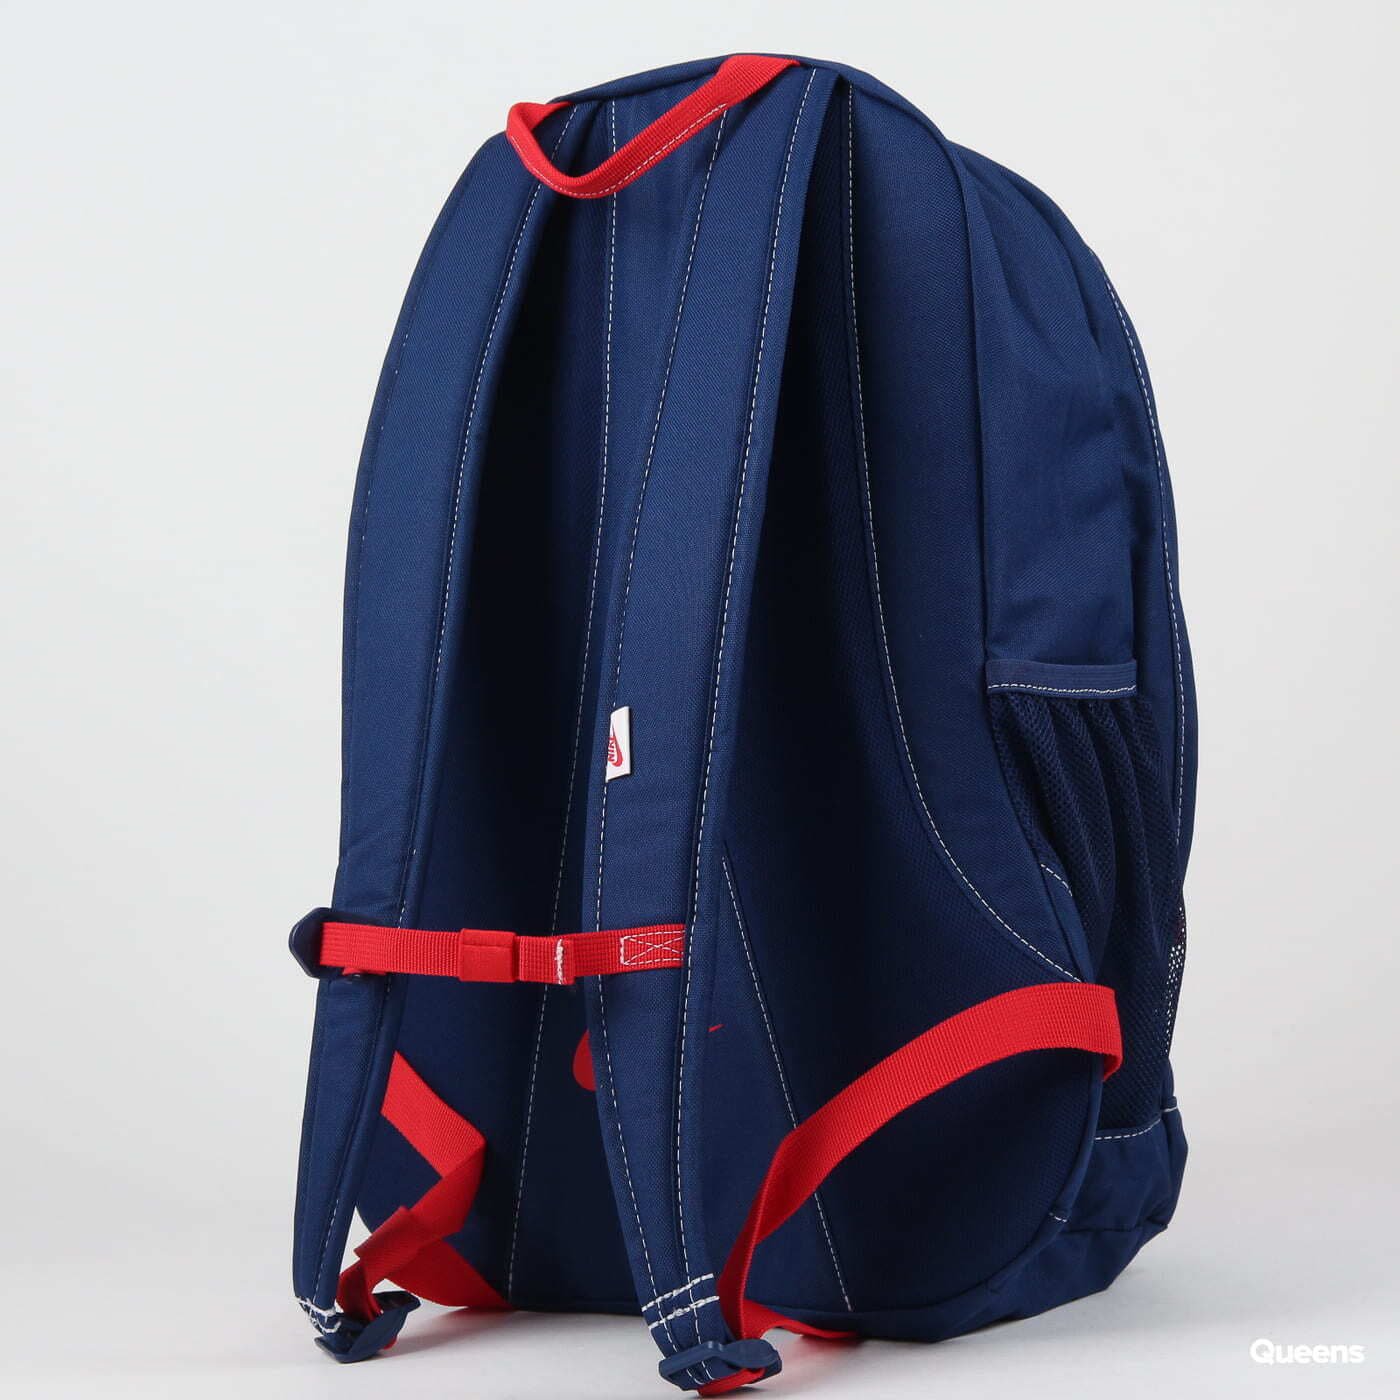 Hayward Futura 2.0 Backpack Blue